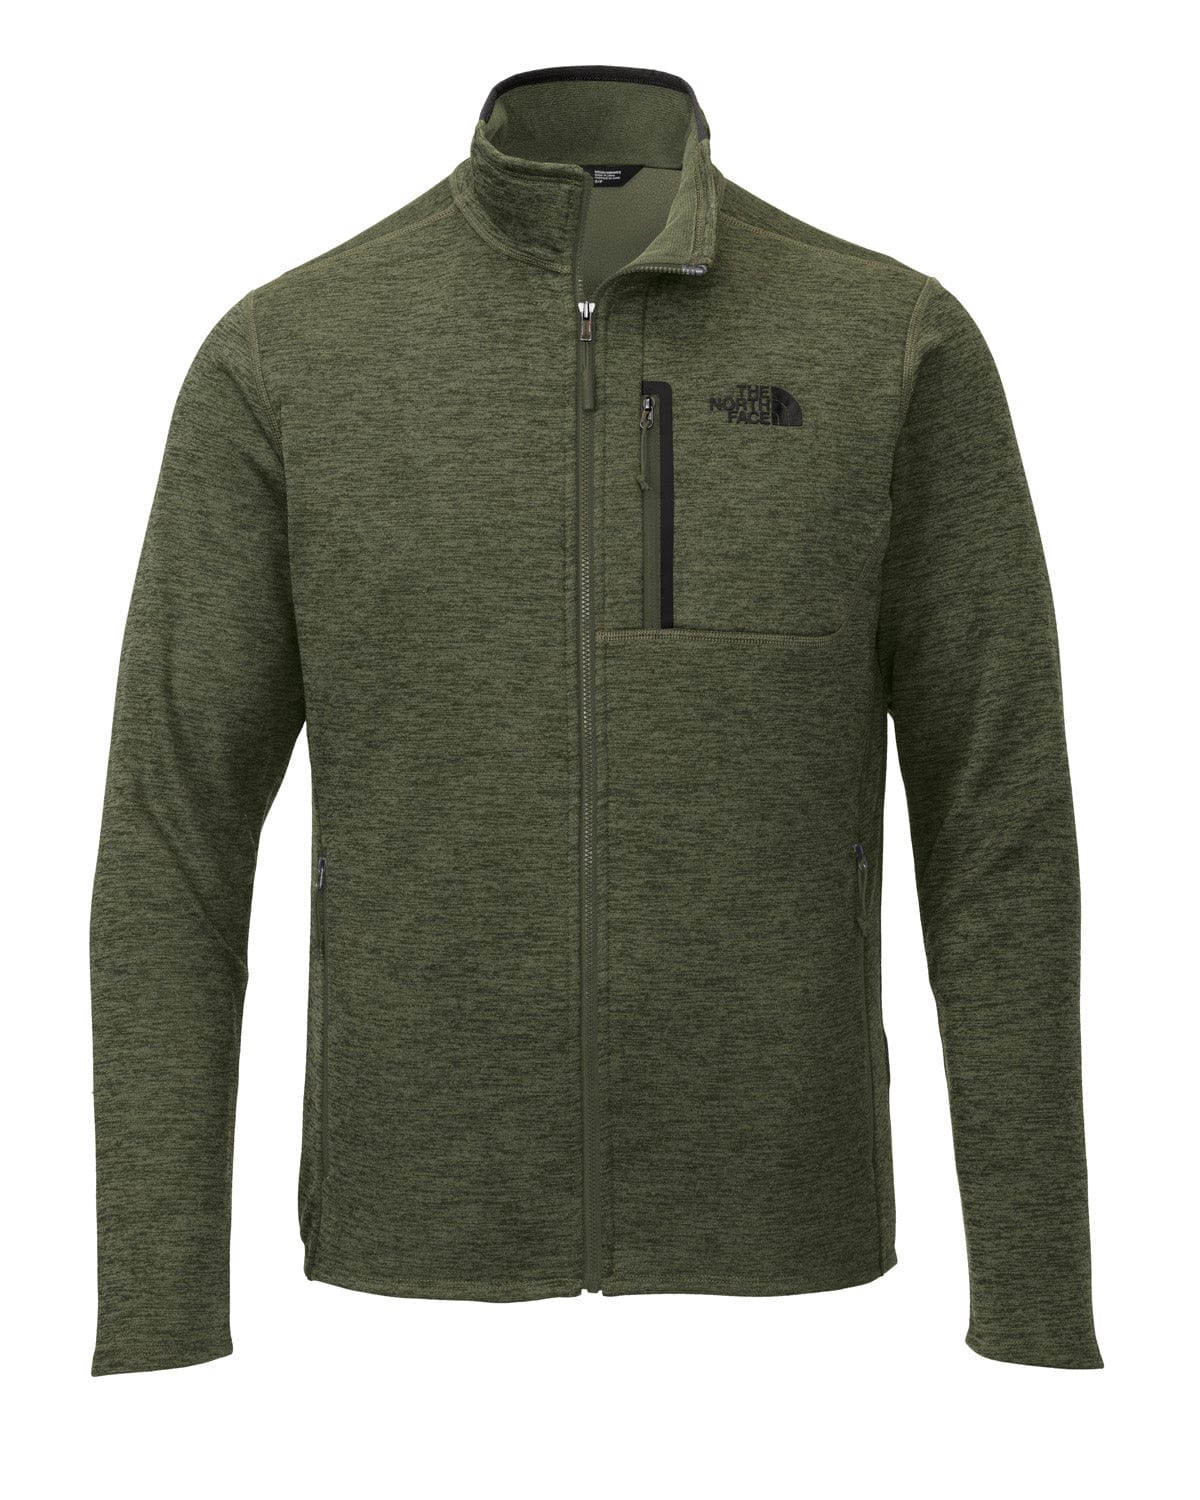 Customized The North Face Sweater Fleece Jacket (Women's)